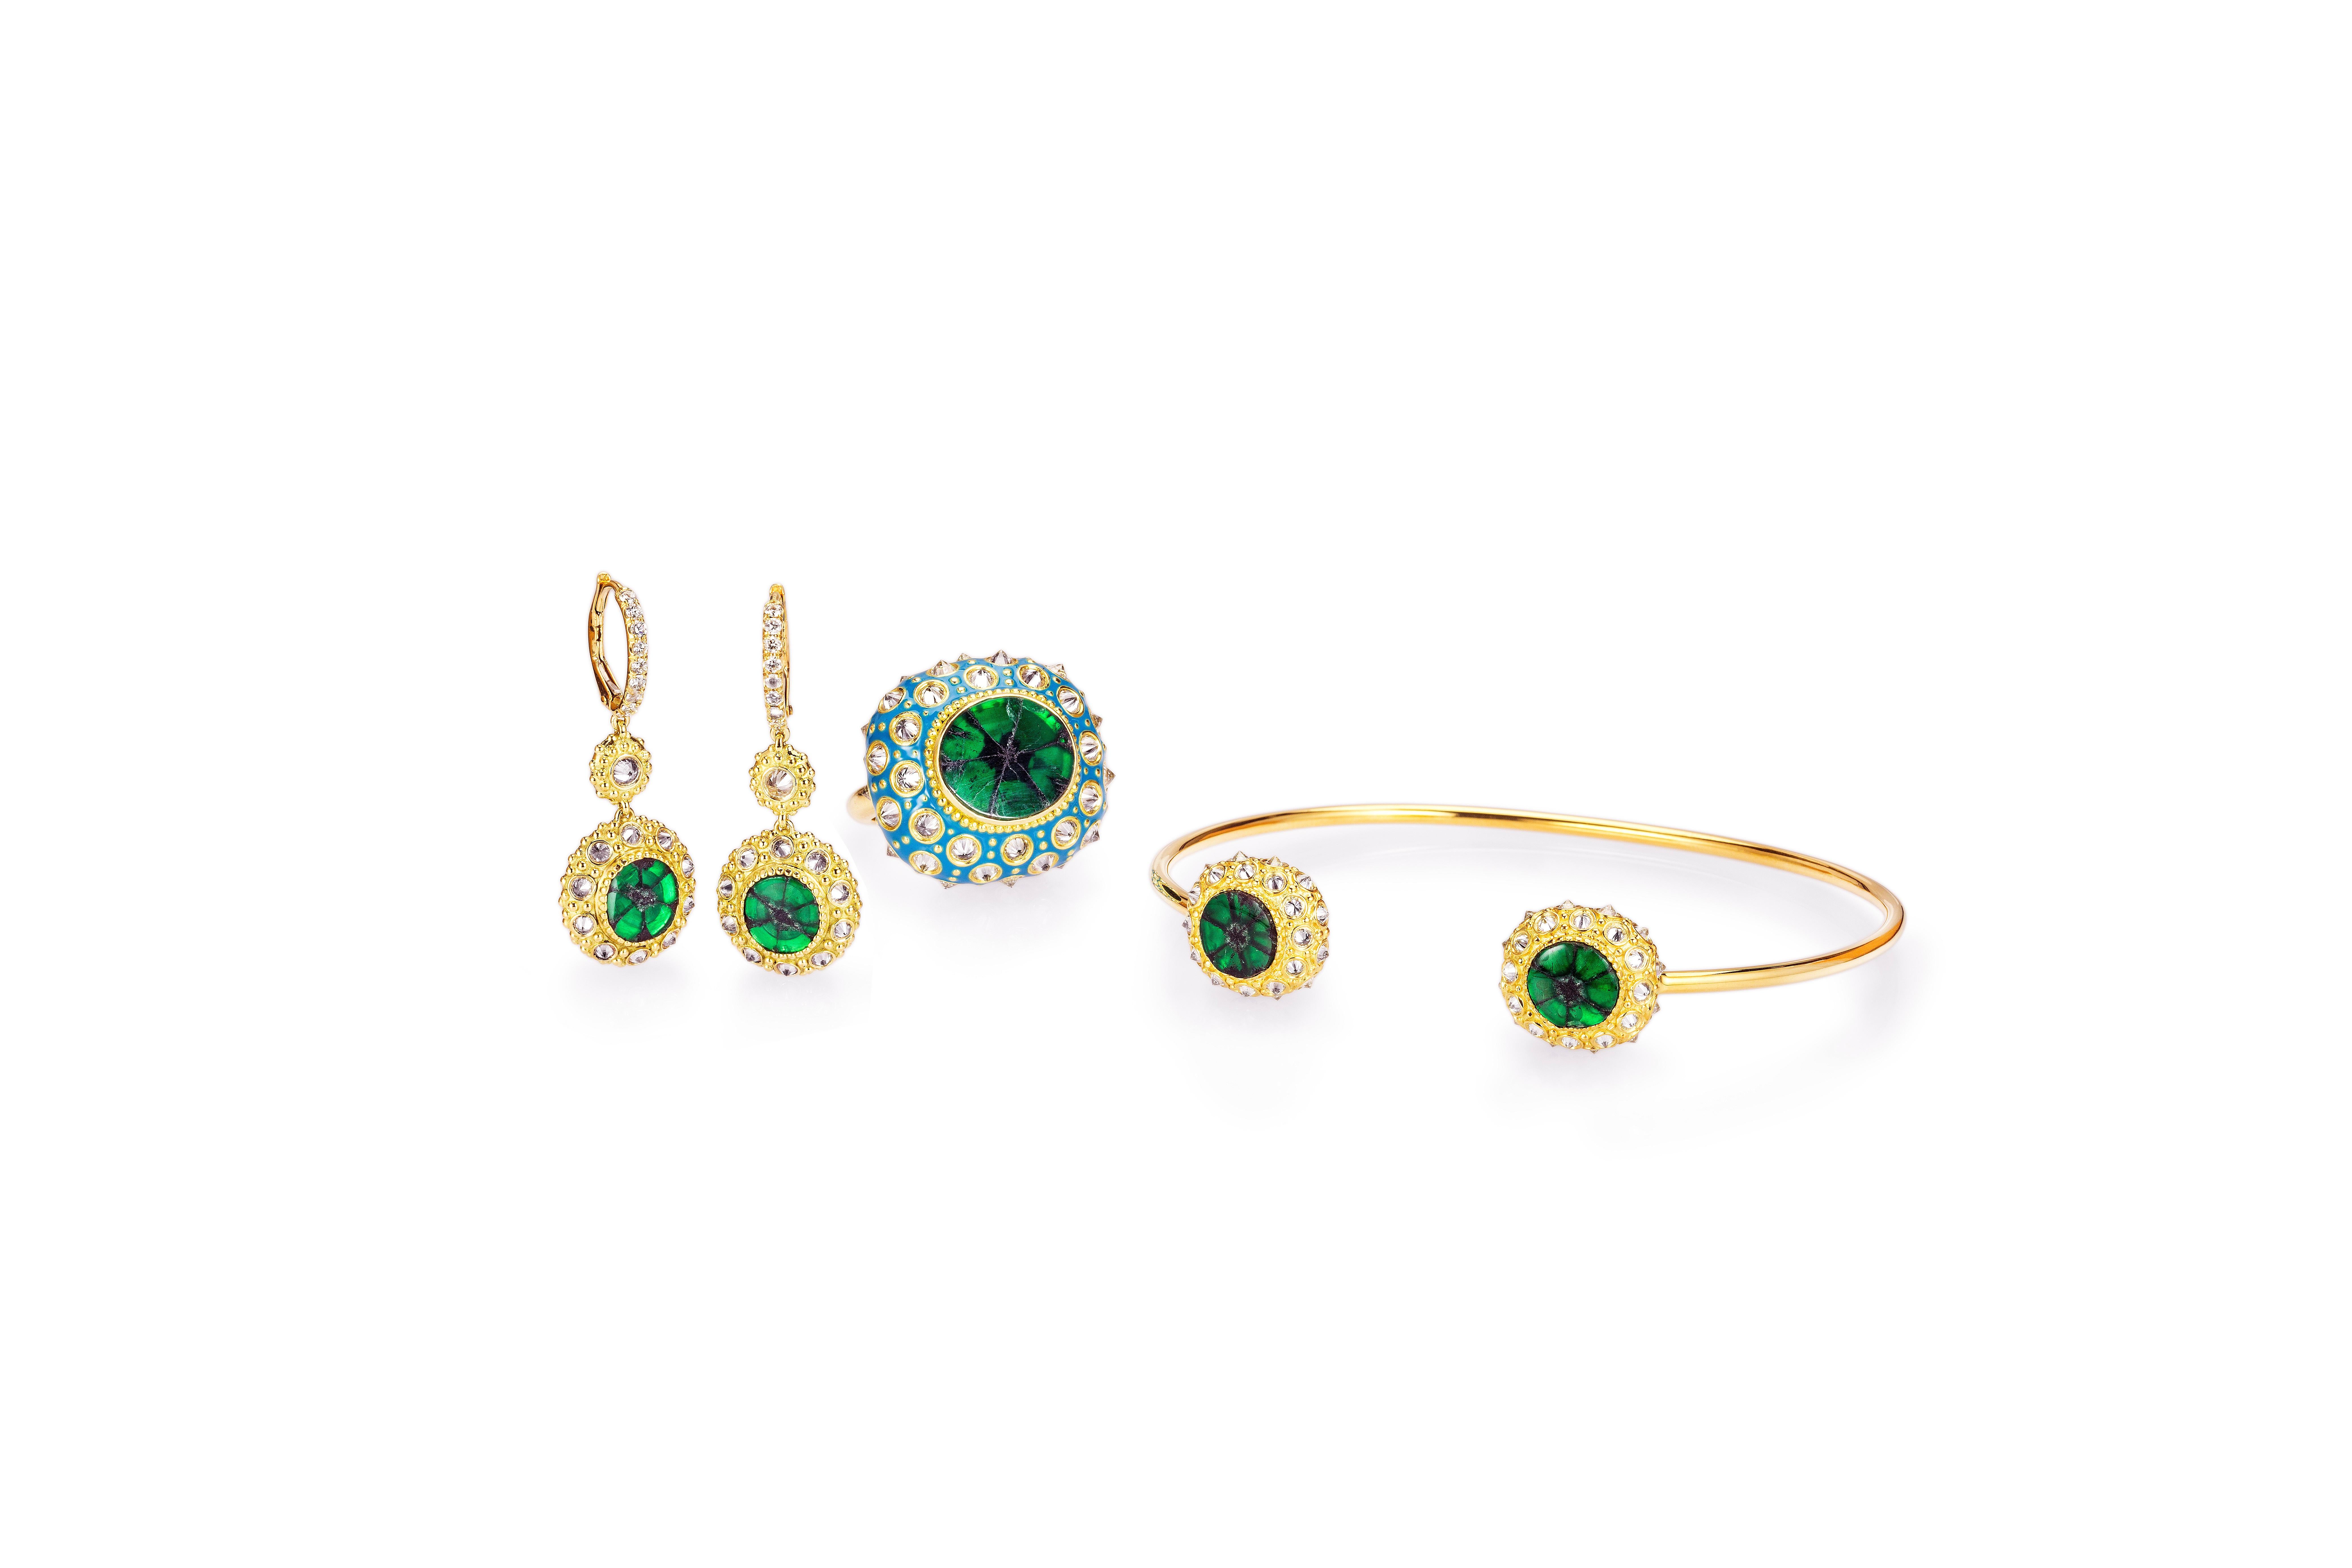 Contemporary AnaKatarina Yellow Gold, Trapiche Emerald and Diamond Cuff Bracelet